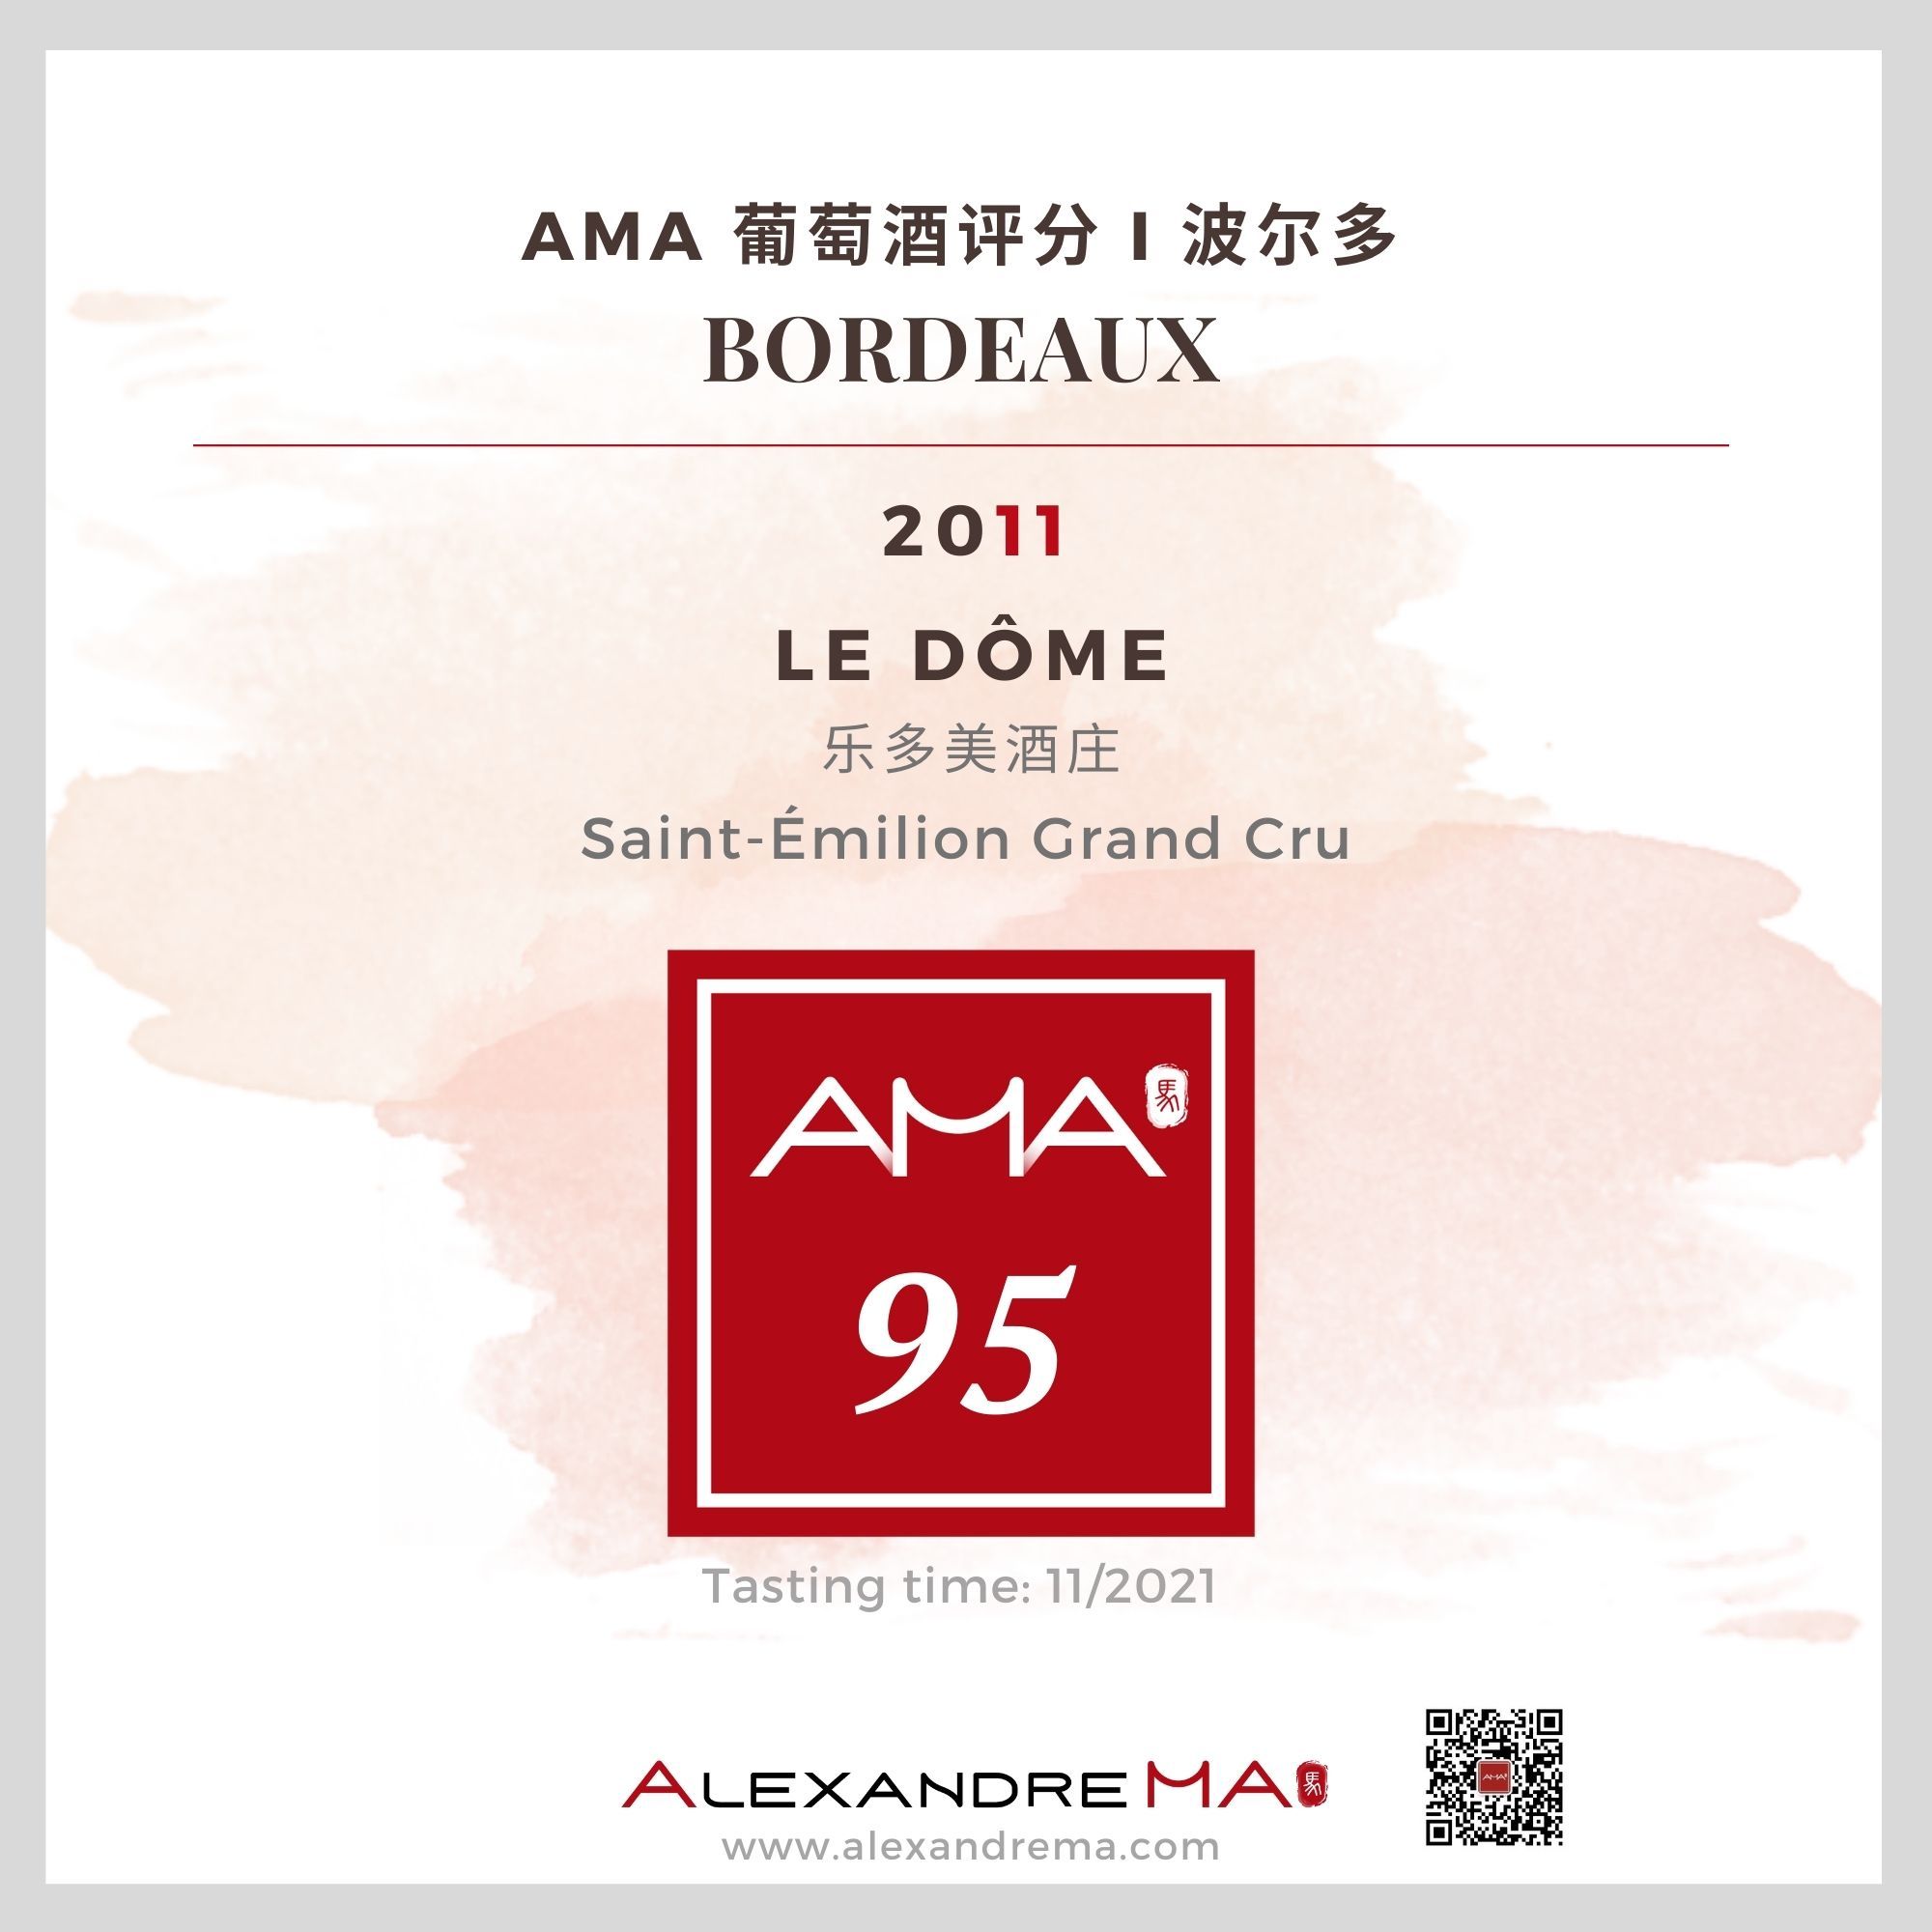 Le Dôme 2011 乐多美酒庄 - Alexandre Ma